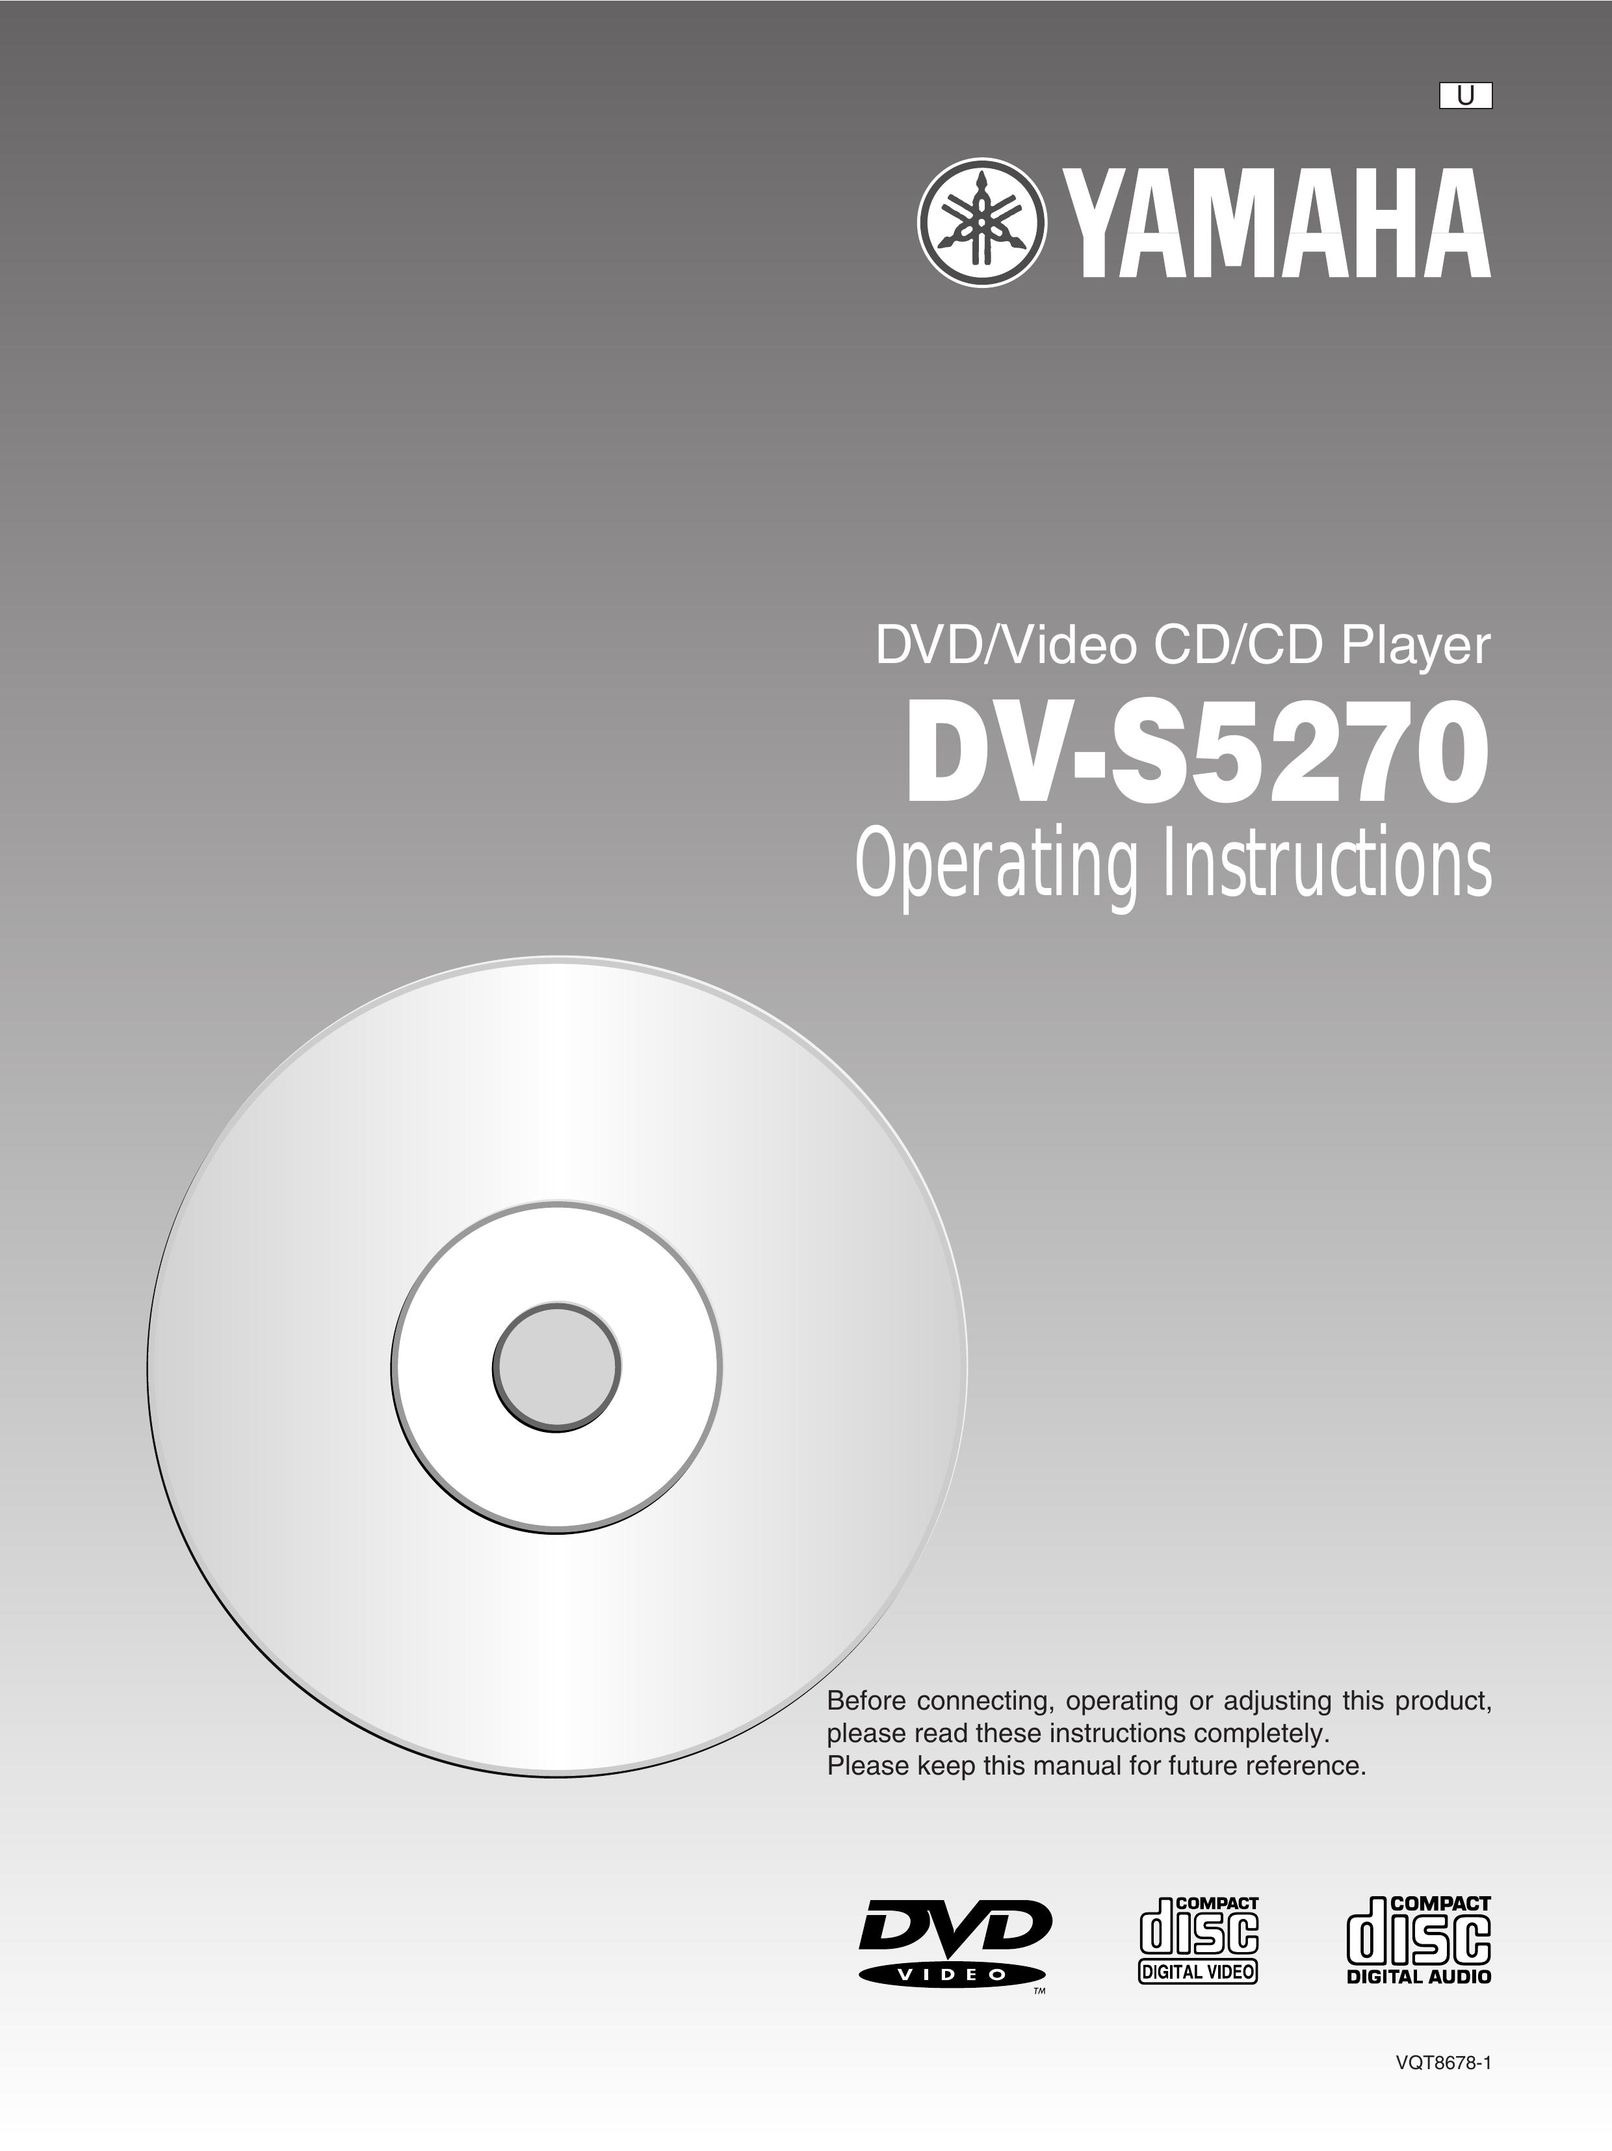 Yamaha DV-S5270 DVD Player User Manual